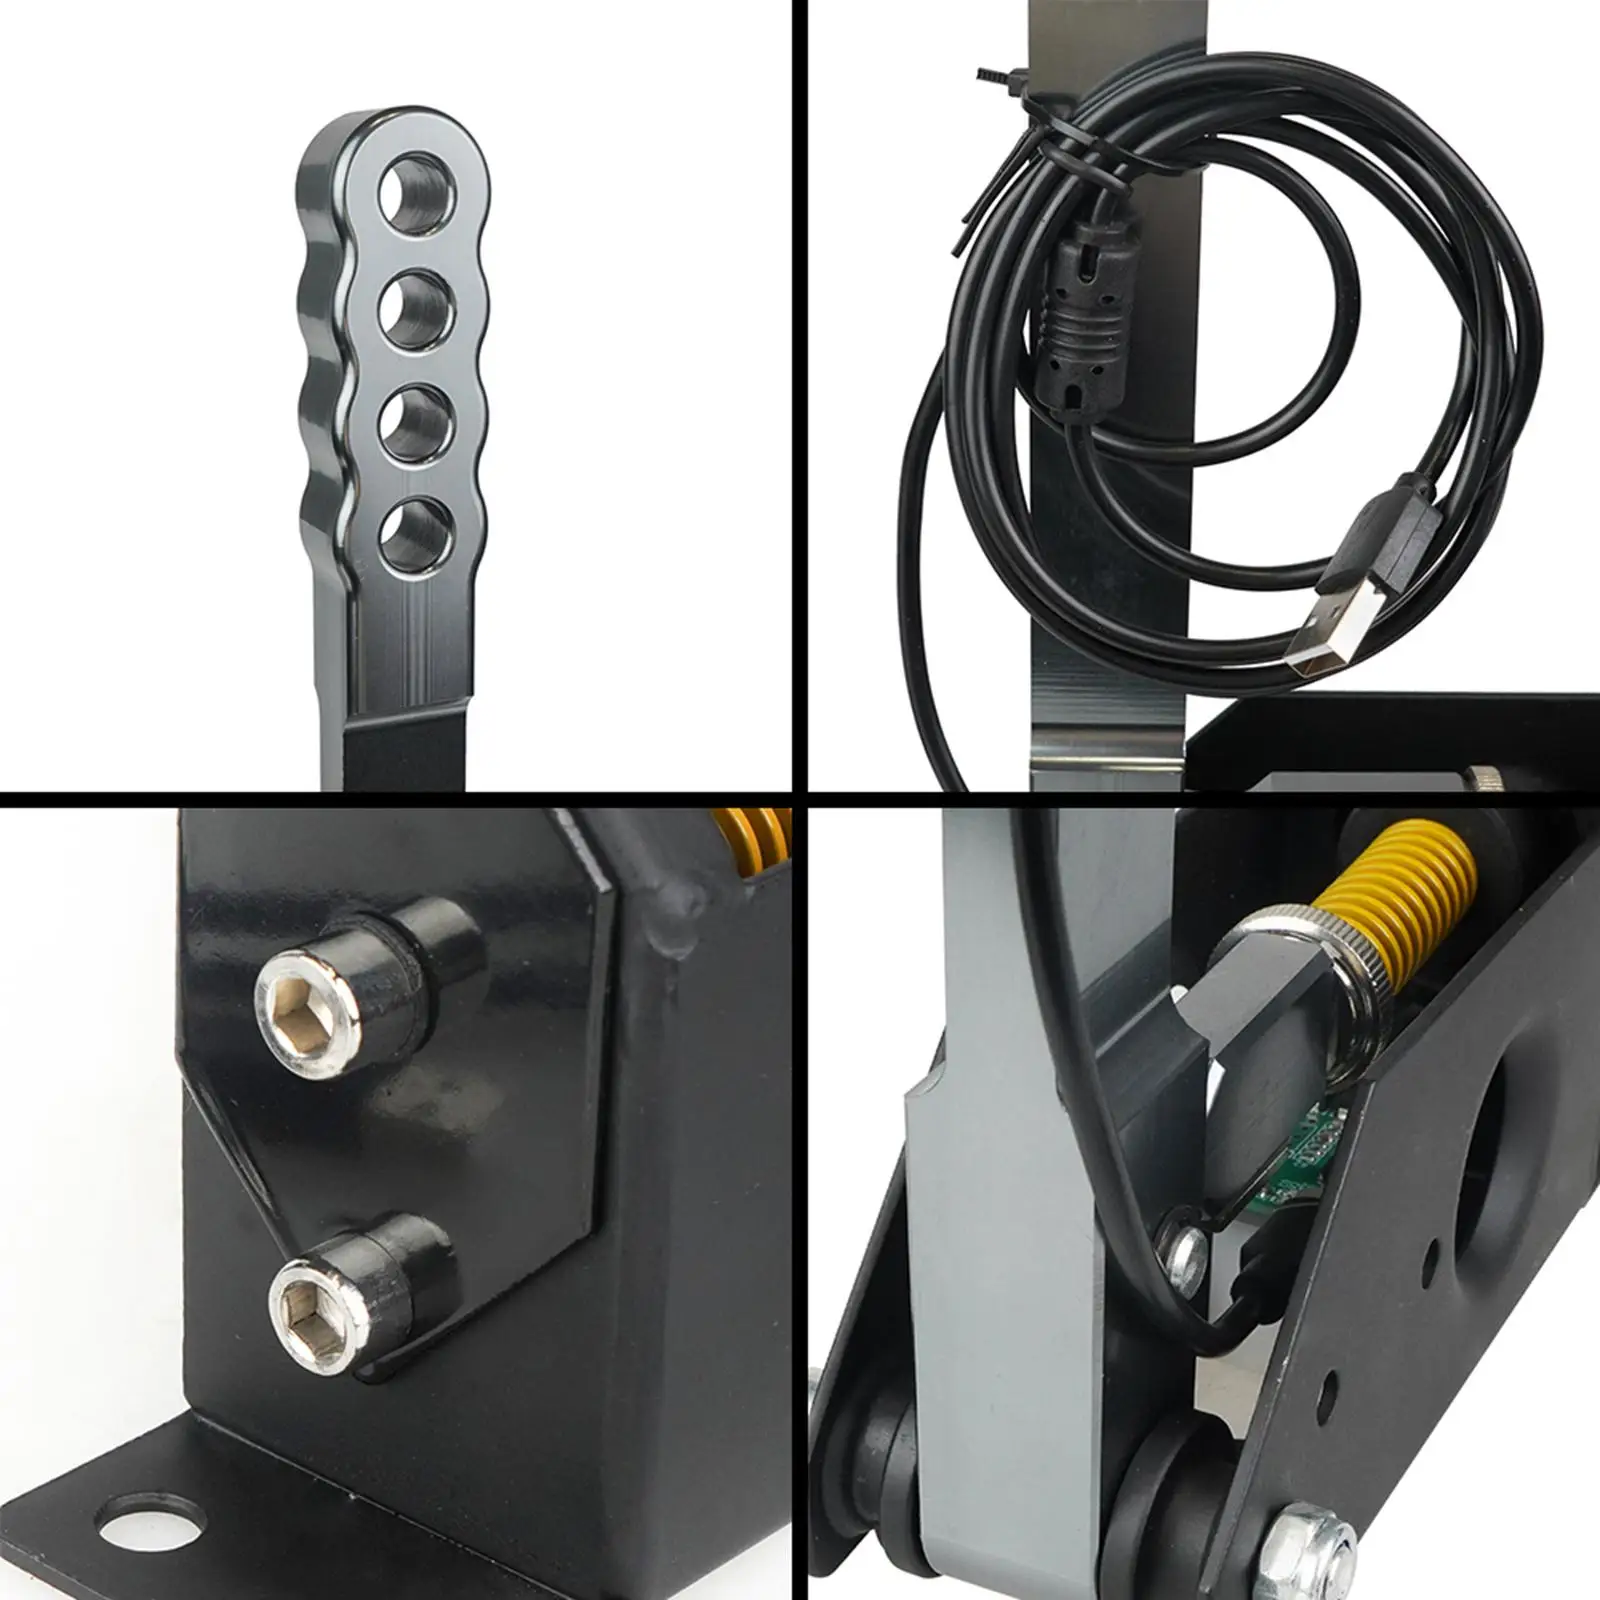 Handbrake USB with Fixing Clip Adjustable Premium Hall Sensor Handbrake Clamp for Logitech G29 Racing Games G27 G25 PC